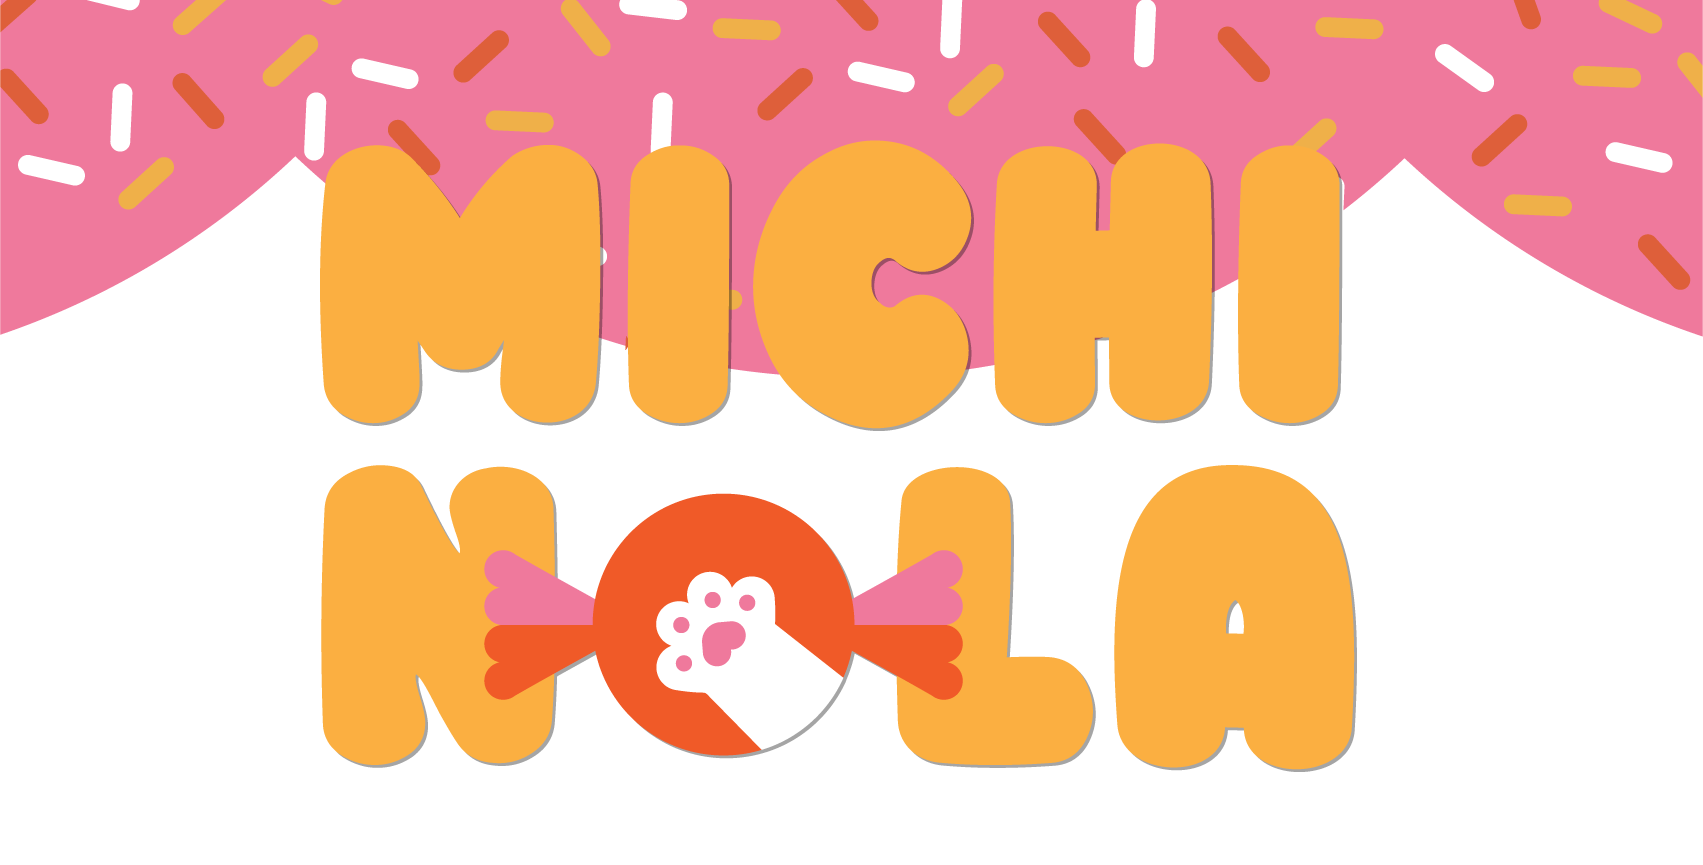 Michinola